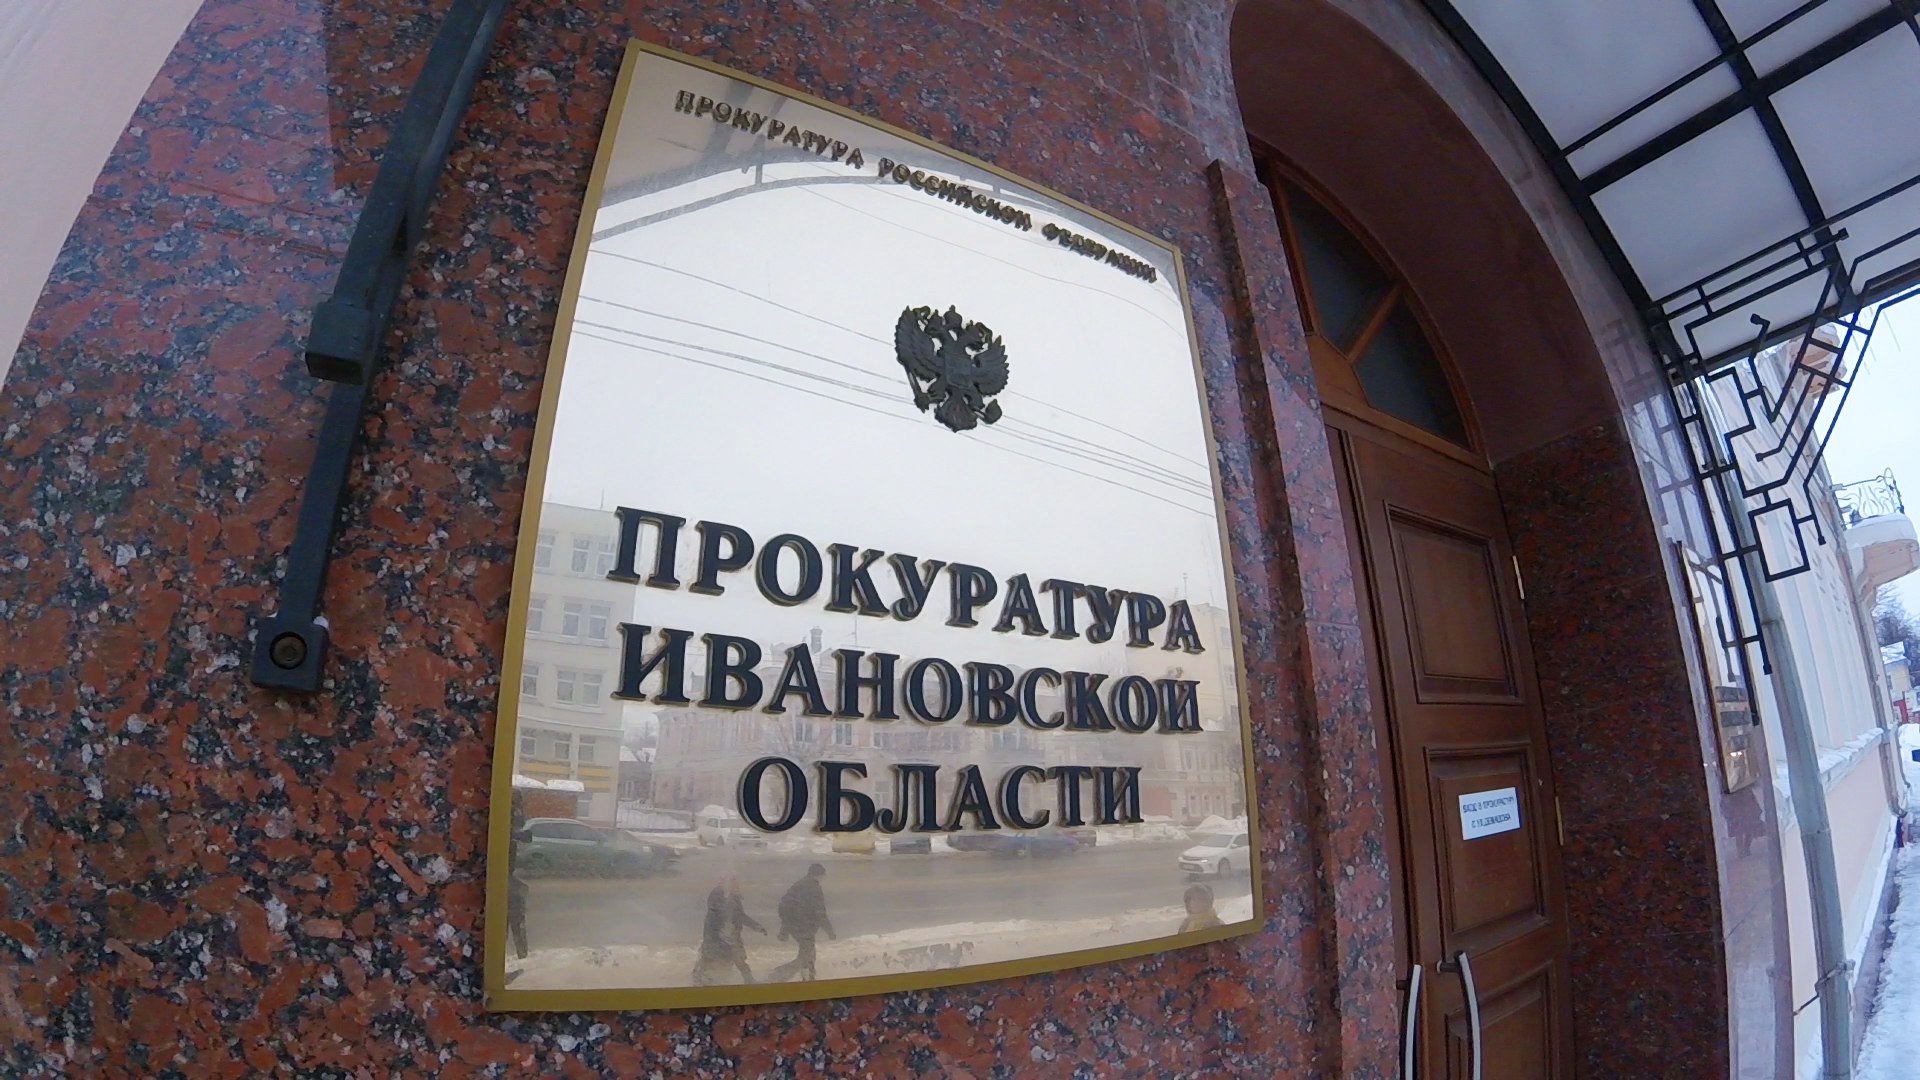 Прокуратура внесла представление главе города Иваново